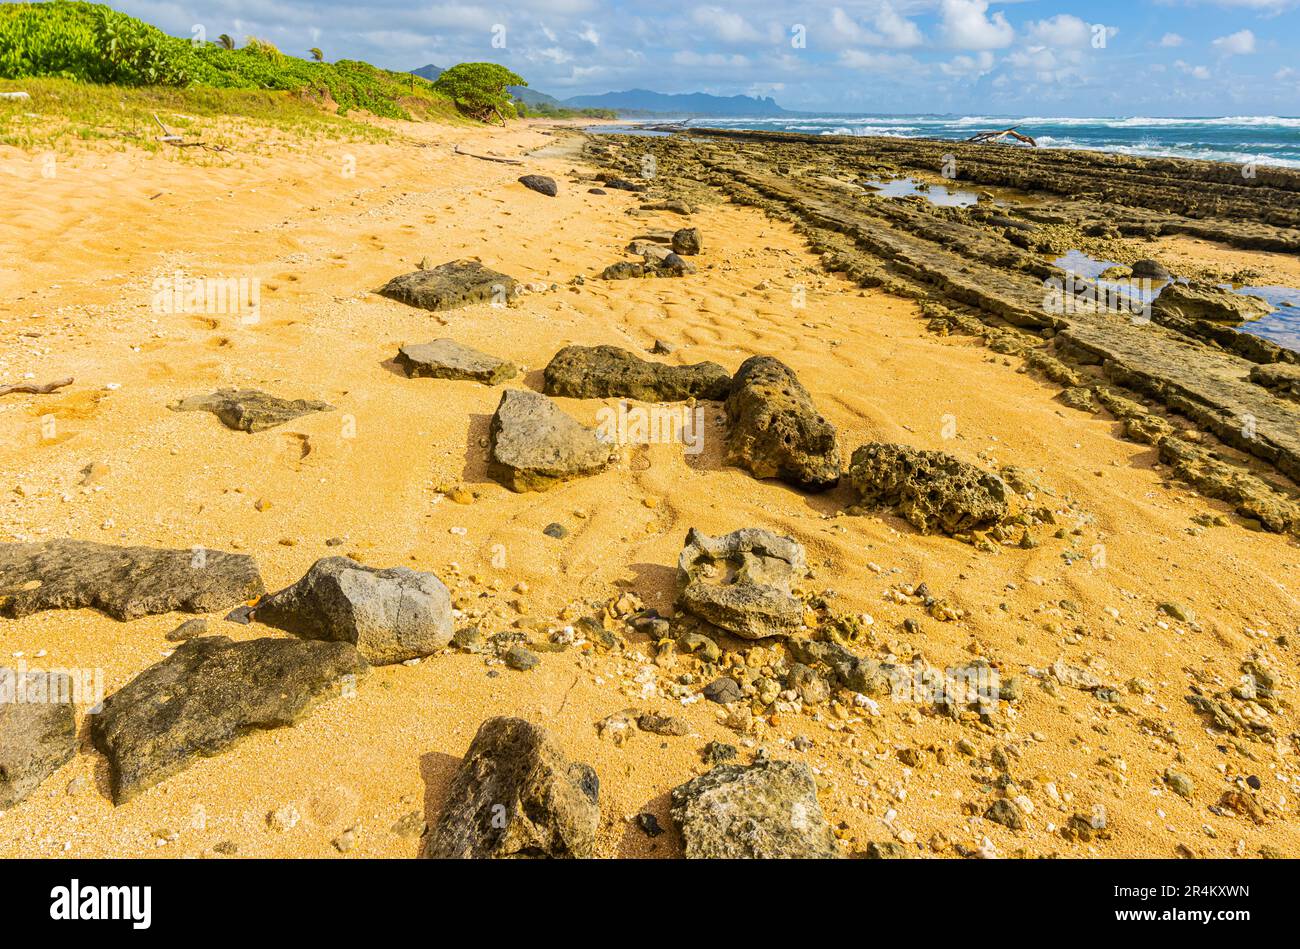 Exposed Coral Reef With  Sleeping Giant Mountain in The Distance, Nukolii Beach, Kauai, Hawaii, USA Stock Photo